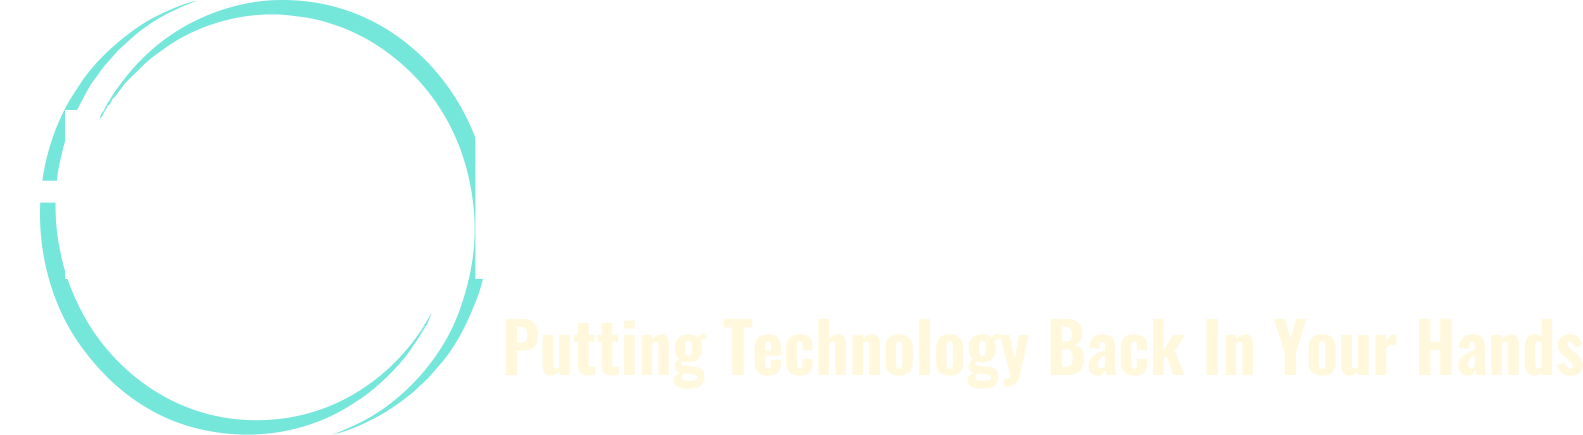 HyperNet Telecommunications